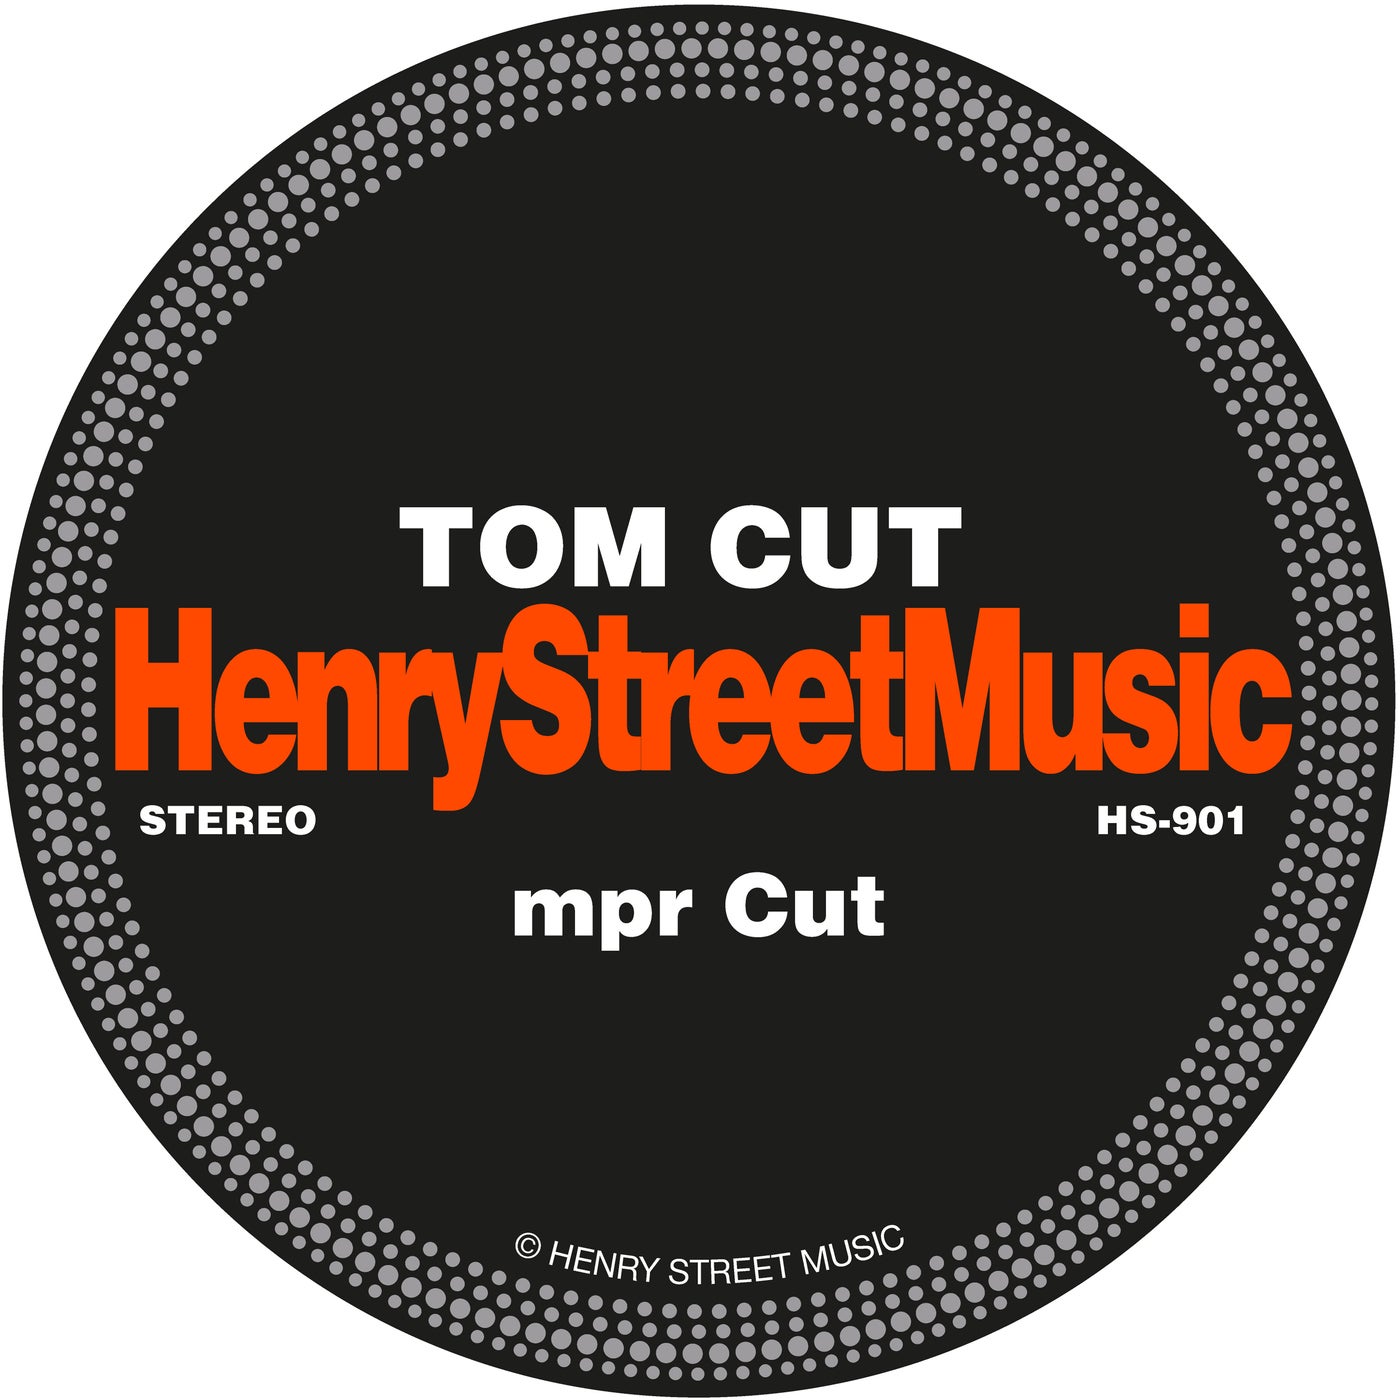 Tom cut